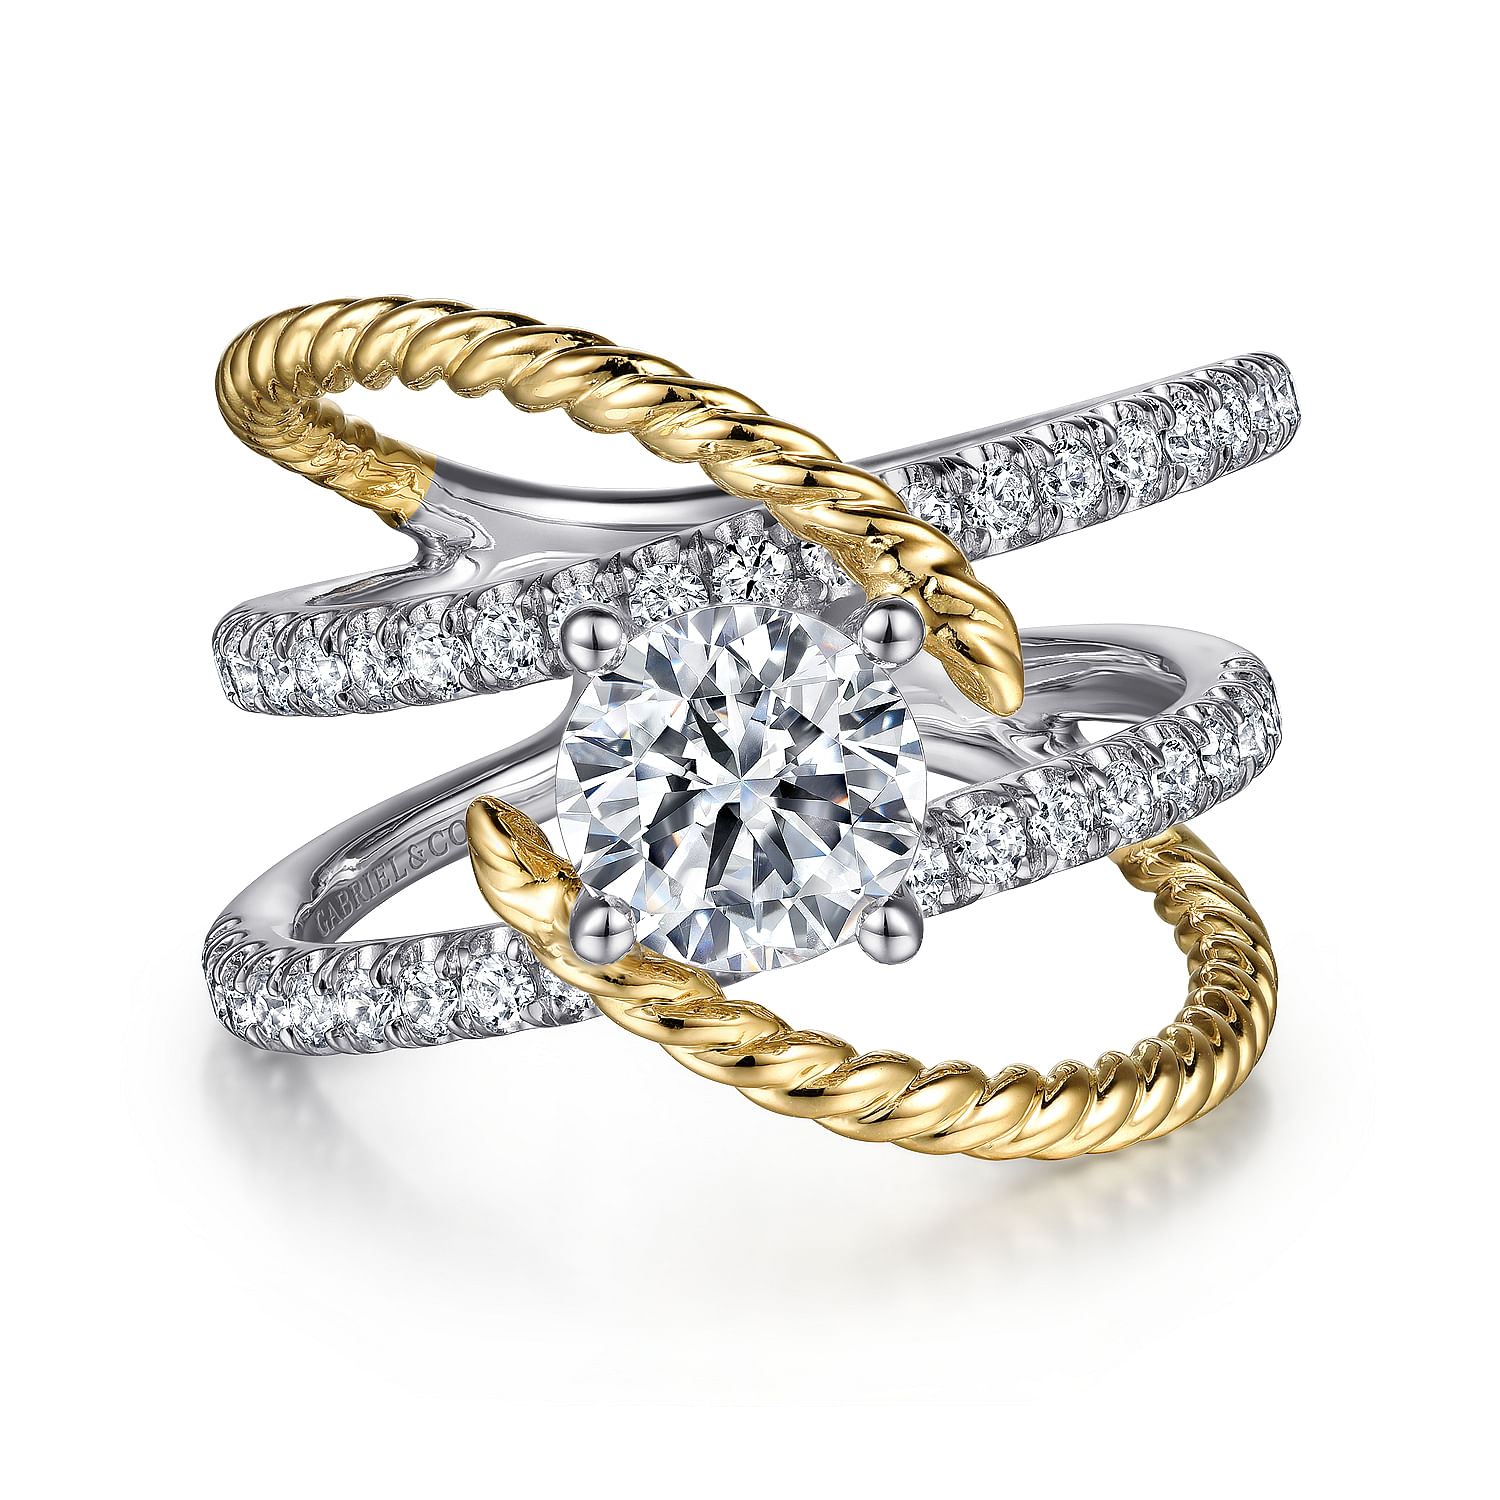 Gabriel - 14K White-Yellow Gold Free Form Round Diamond Engagement Ring